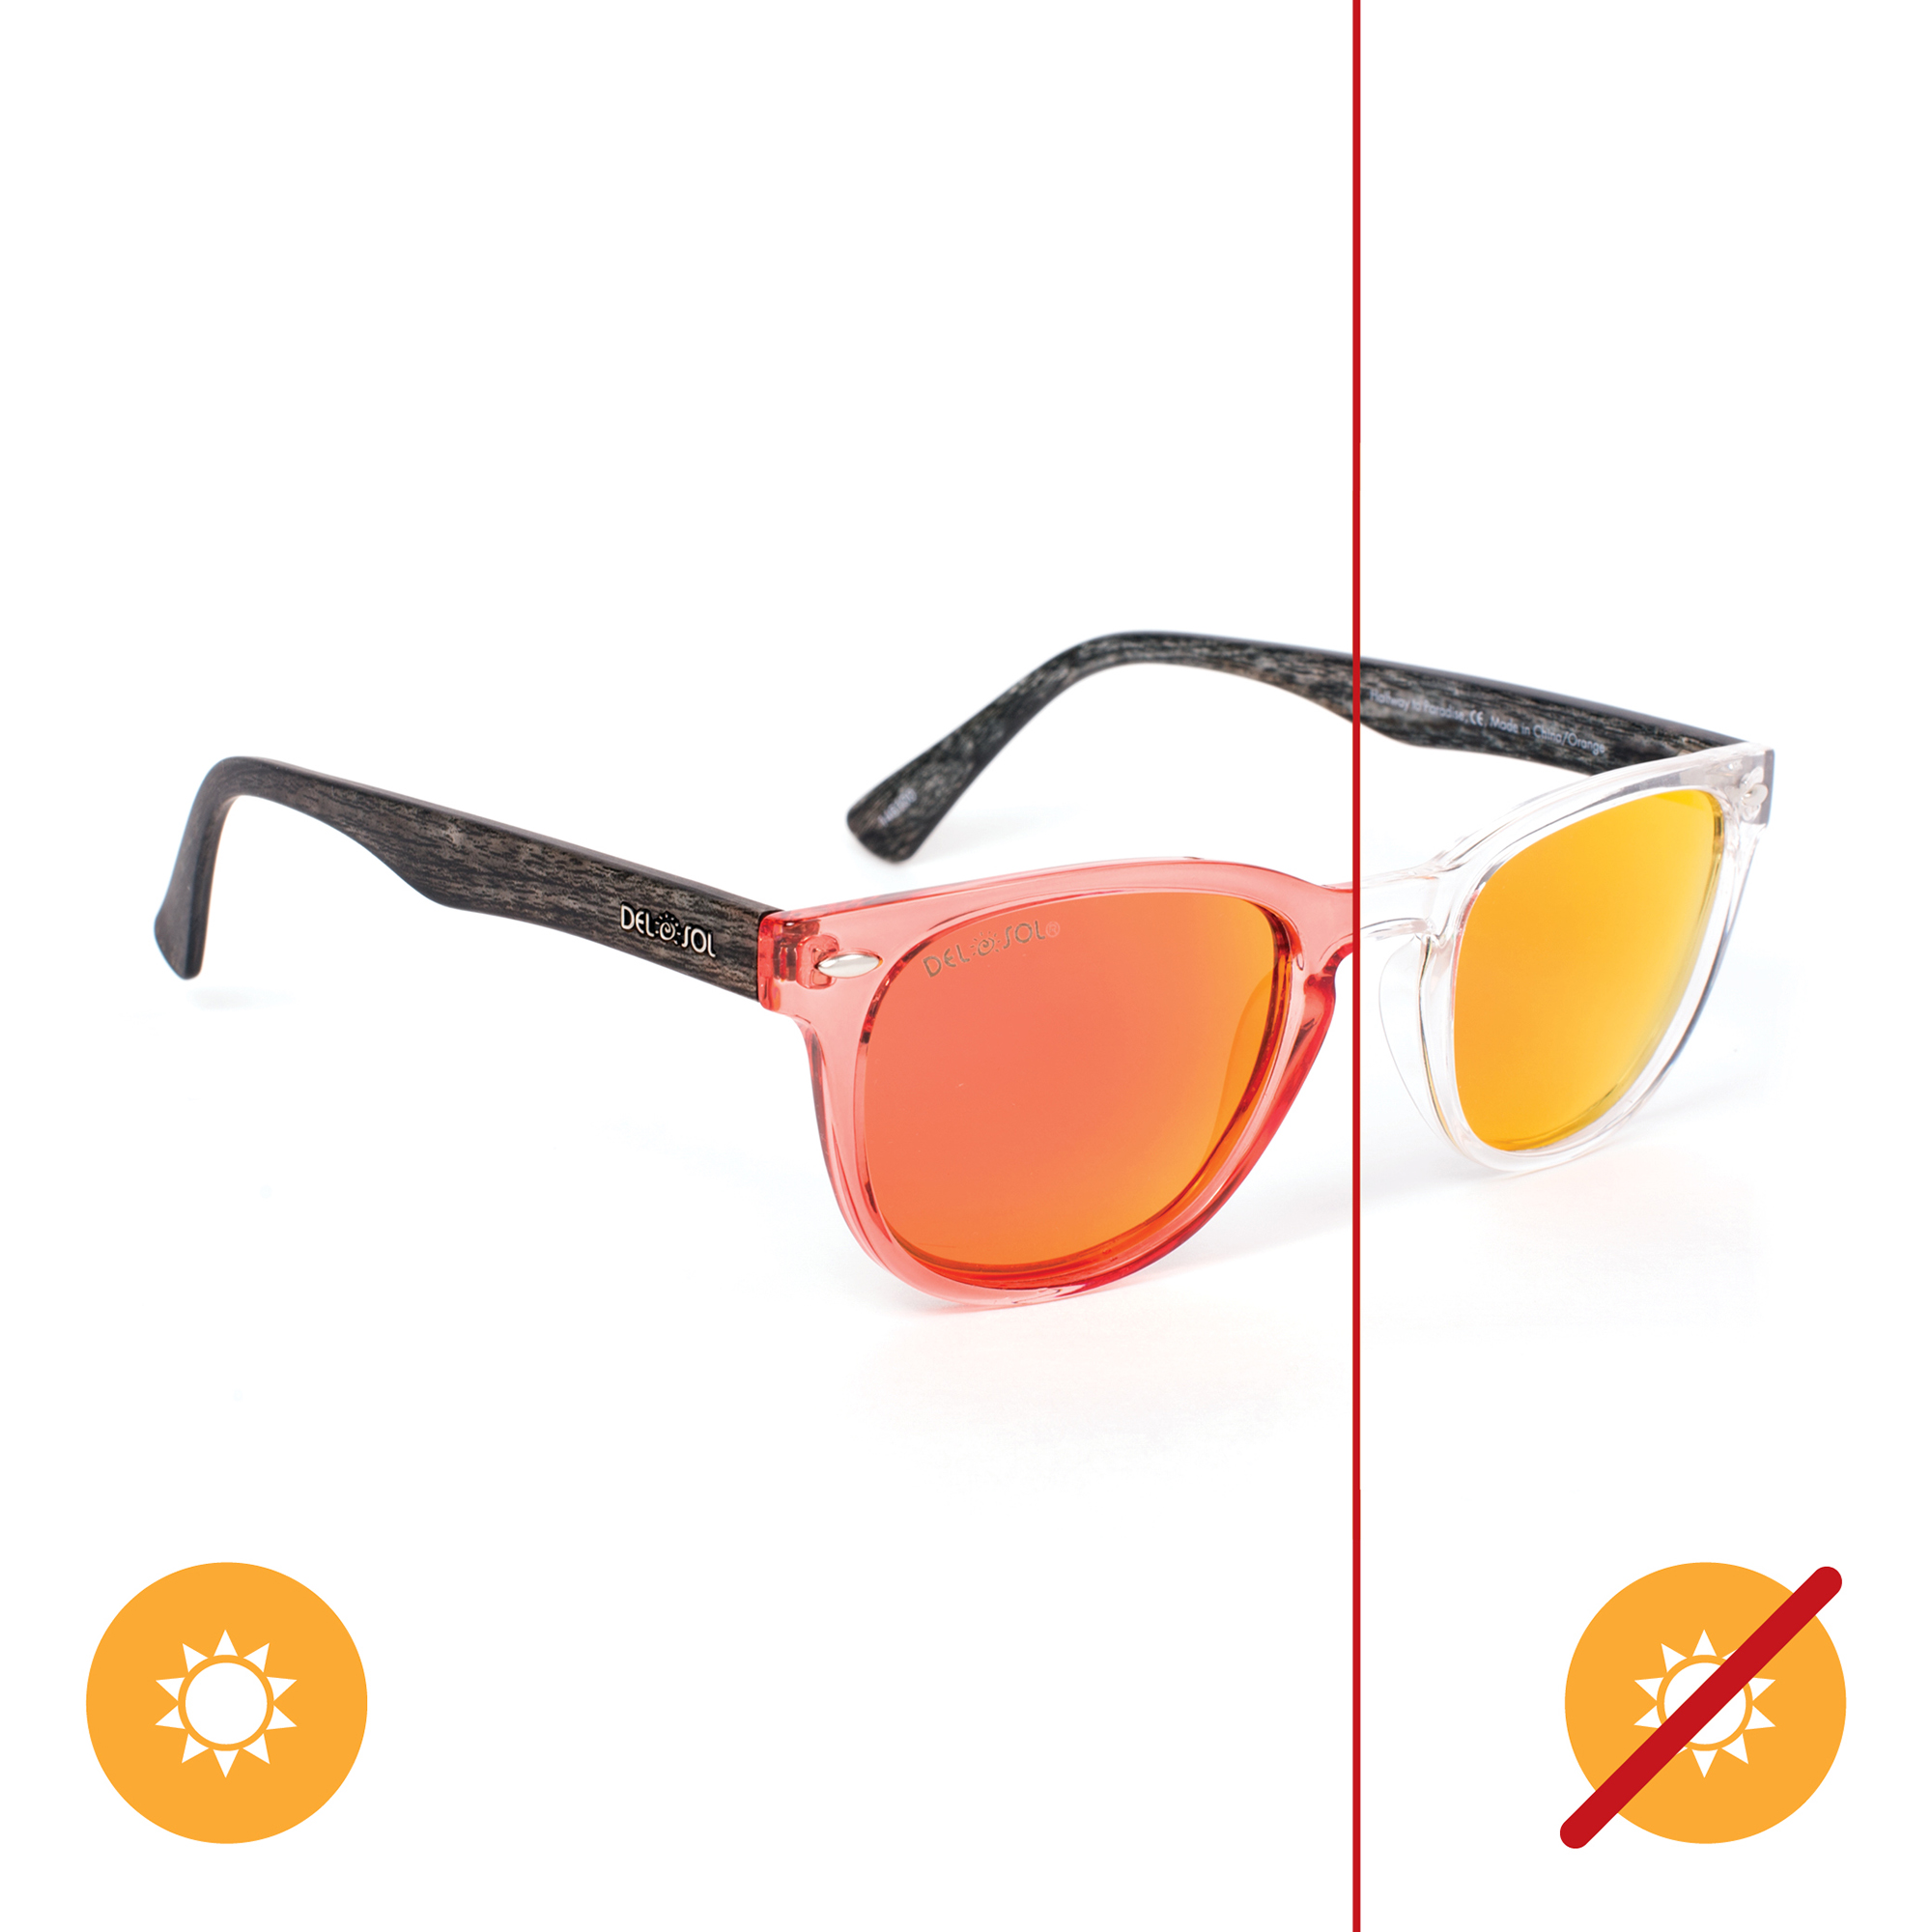 Del Sol Solize Halfway to Paradise - Clear-Orange for Unisex 1 Pc Sunglasses